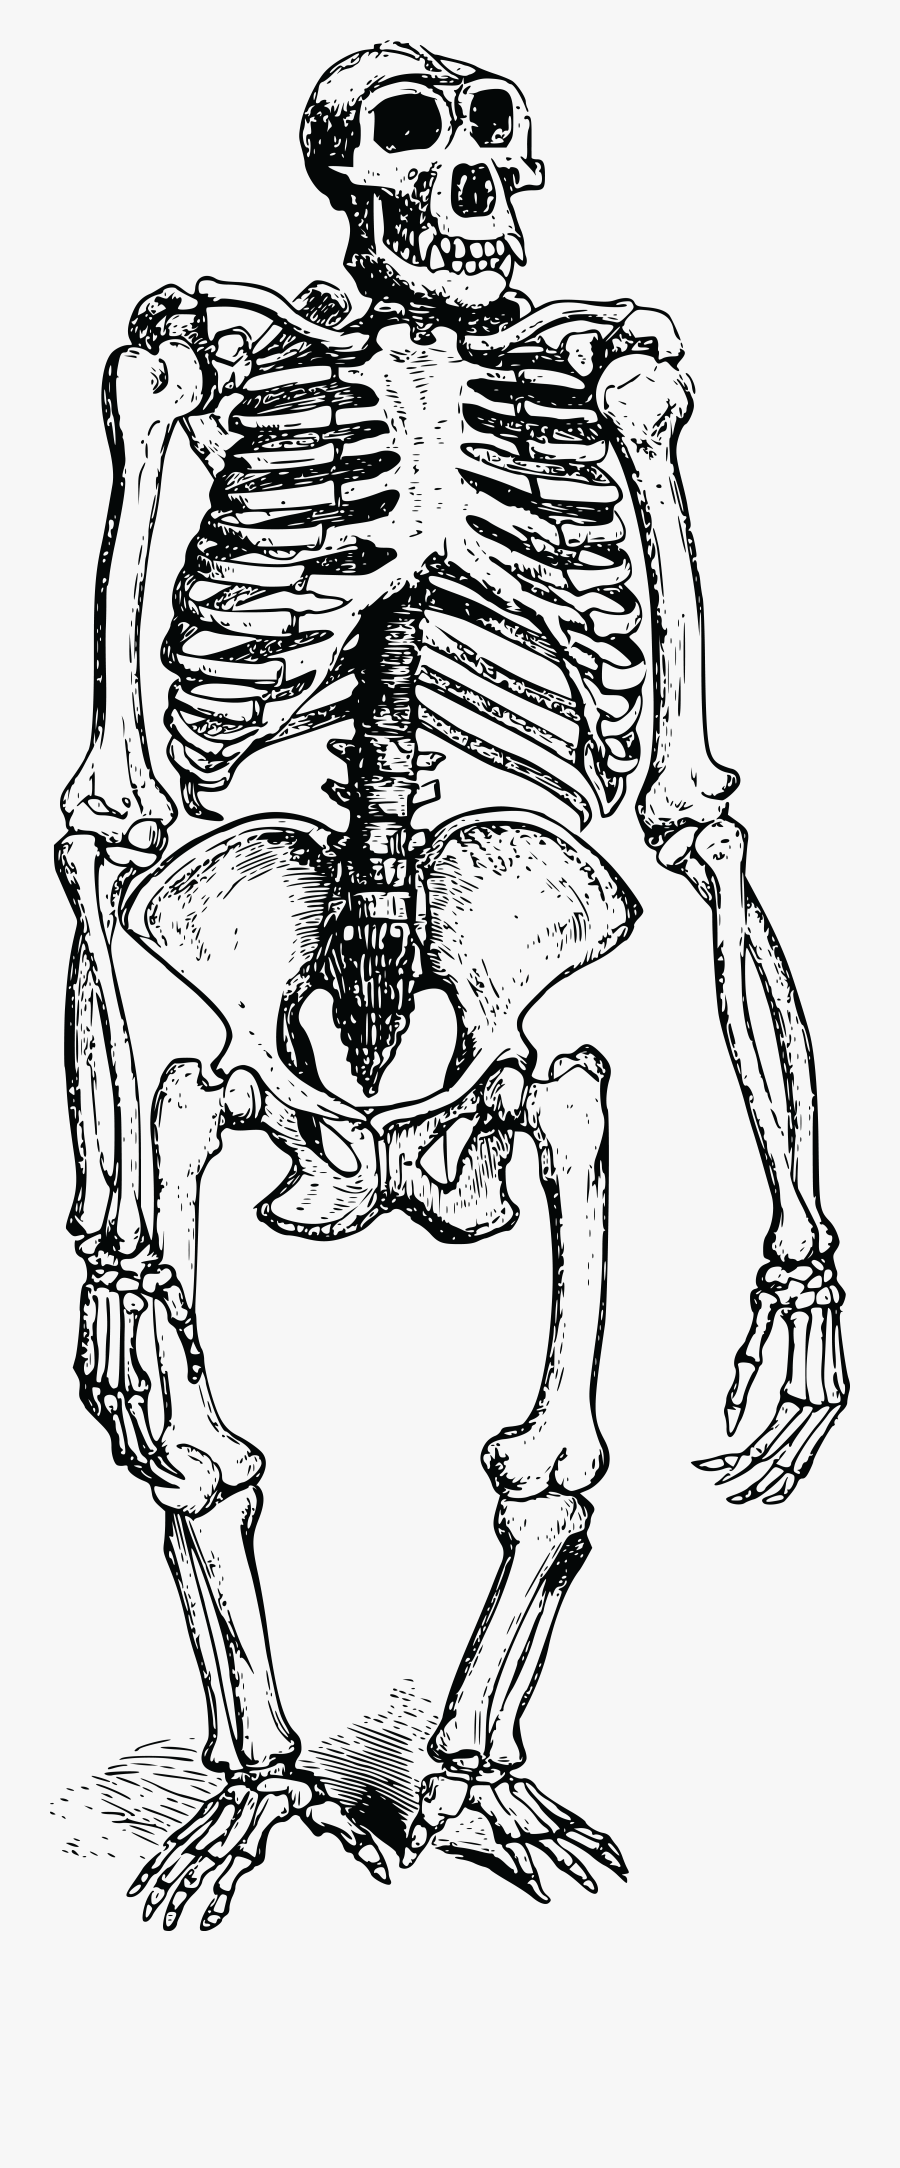 Free Clipart Of A Gorilla Skeleton - Gorilla Skeleton Png, Transparent Clipart